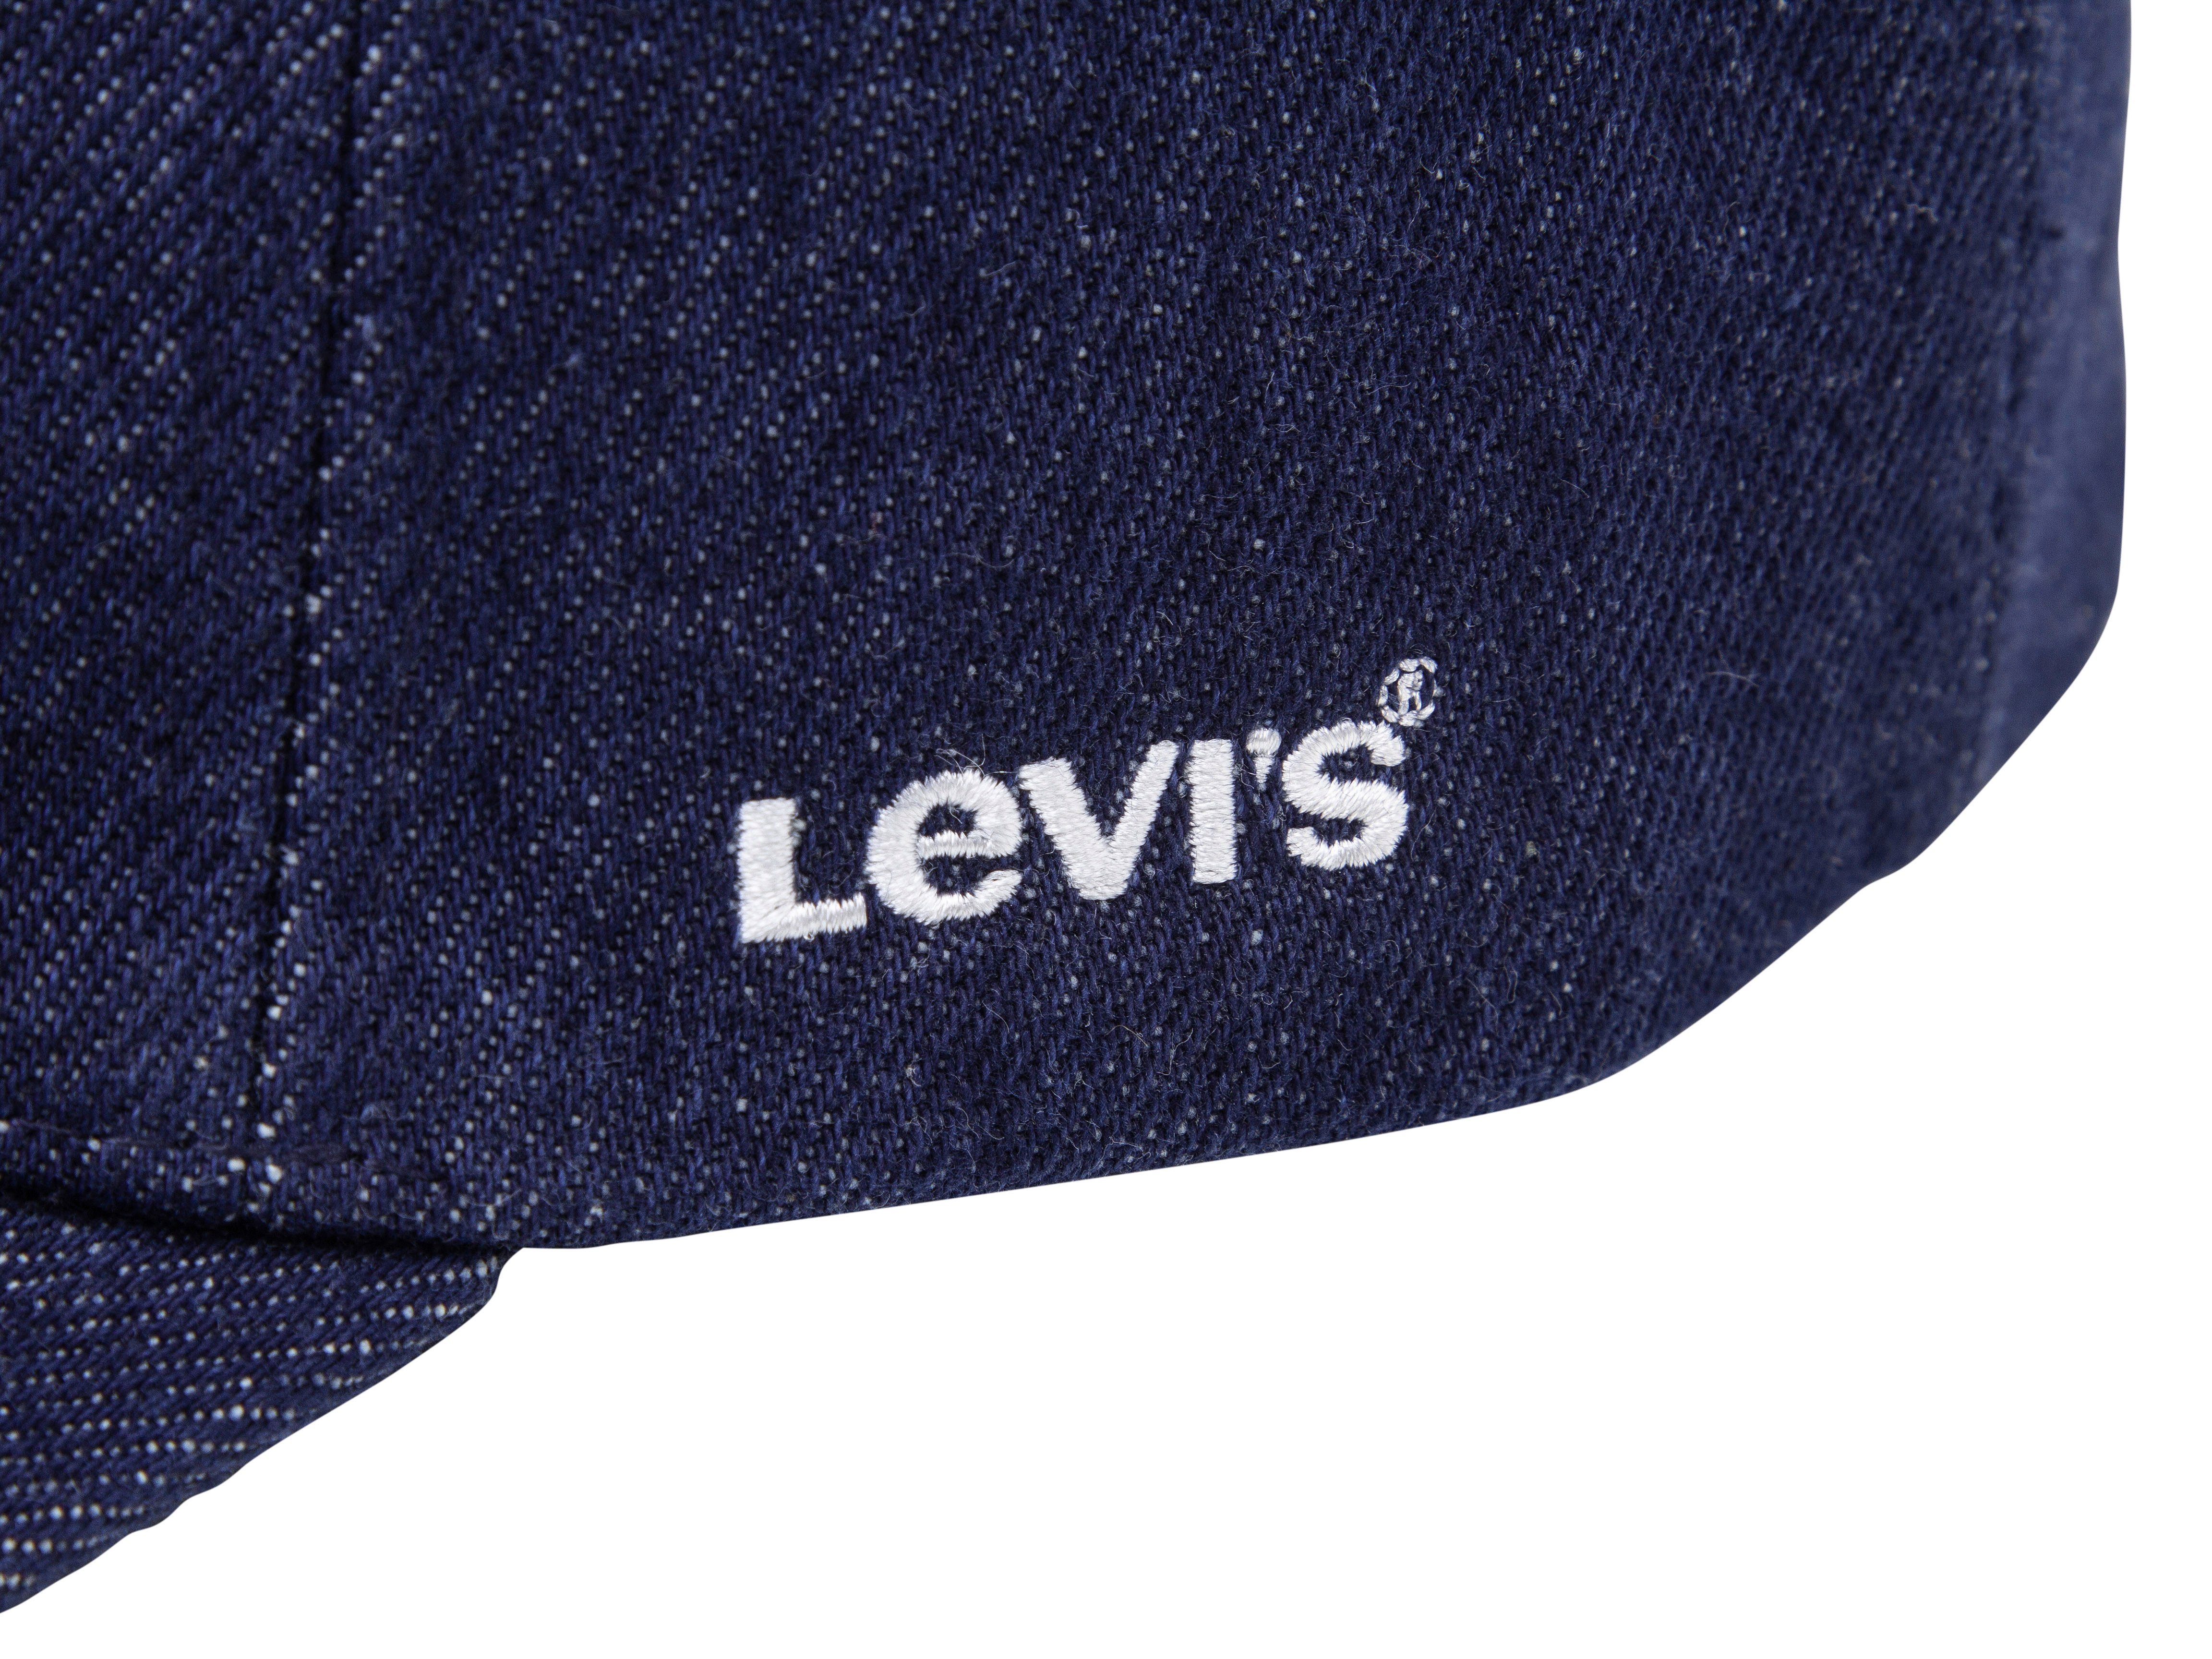 Levi's® Baseball Cap ESSENTIAL dark blue